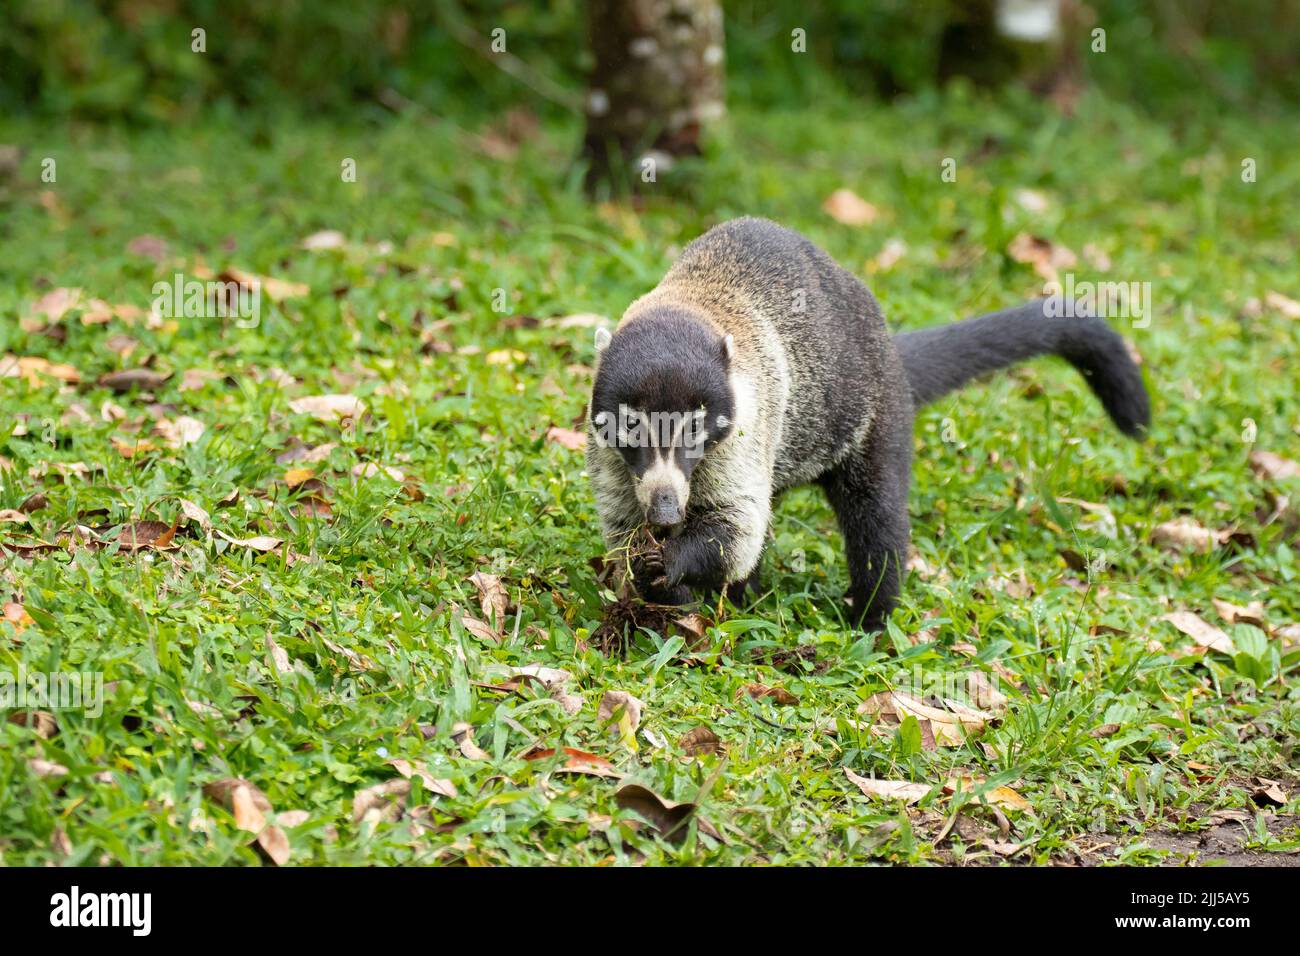 Central American Coati (Nasua narica), also known as coatimundi, foraging on the ground Stock Photo